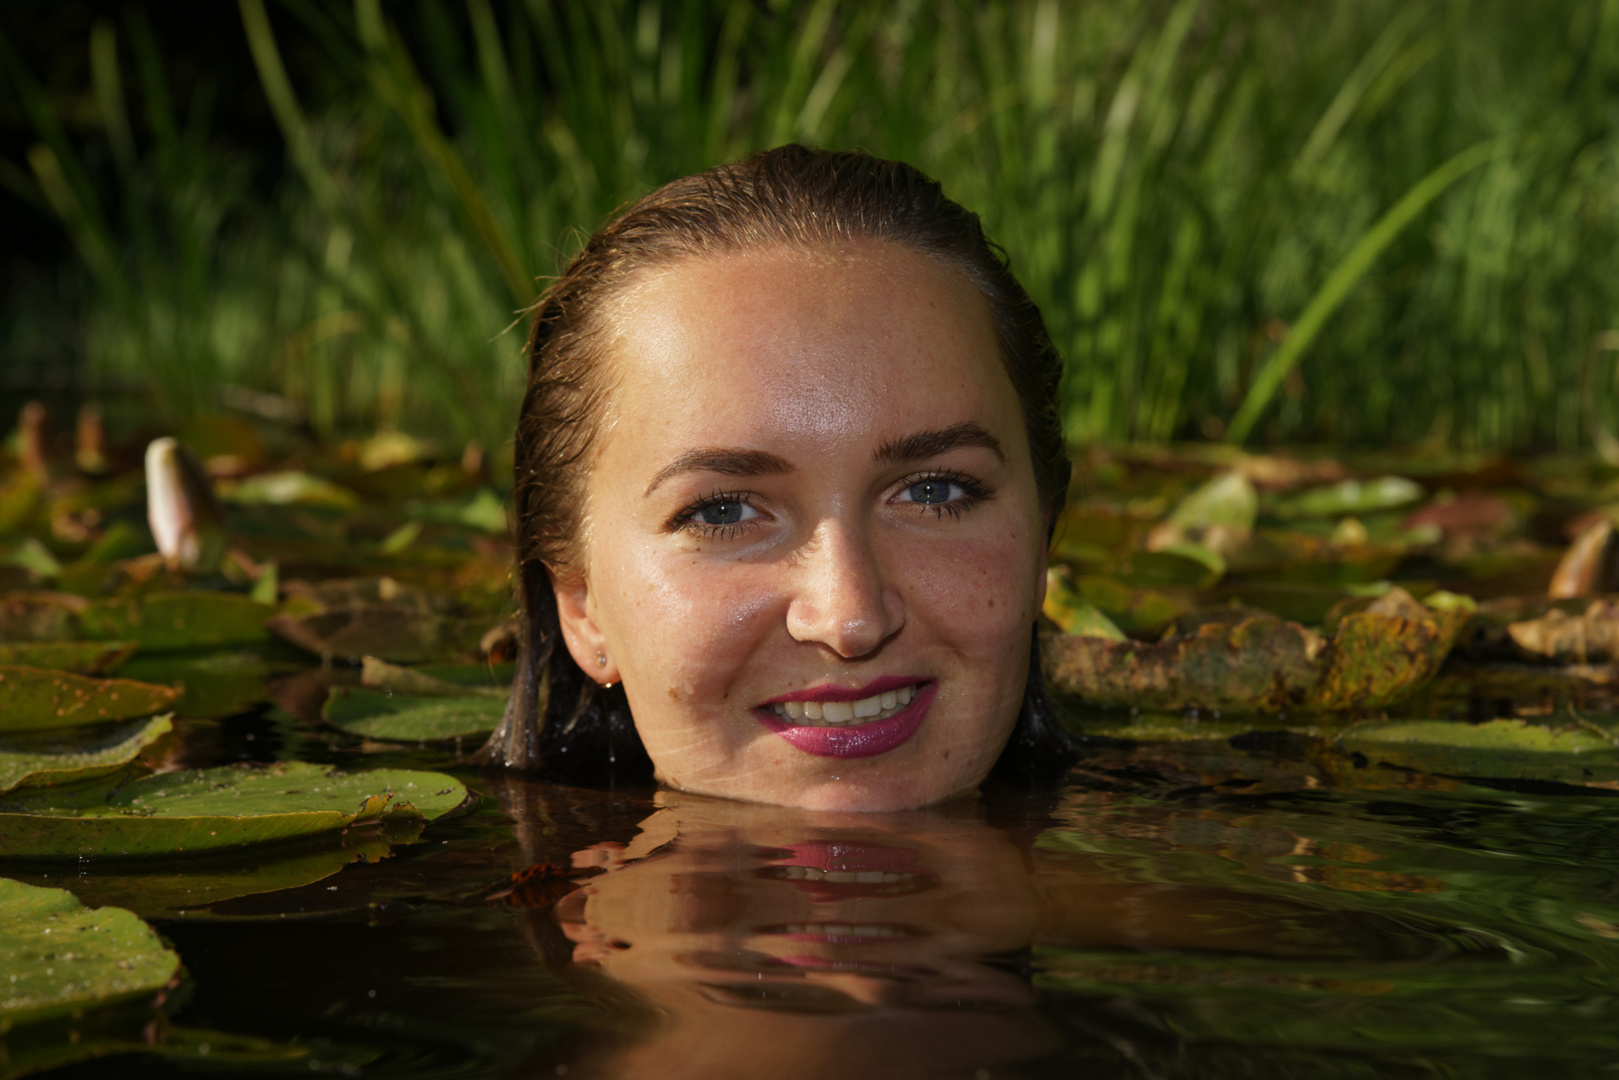 Polina lächelt im Teich